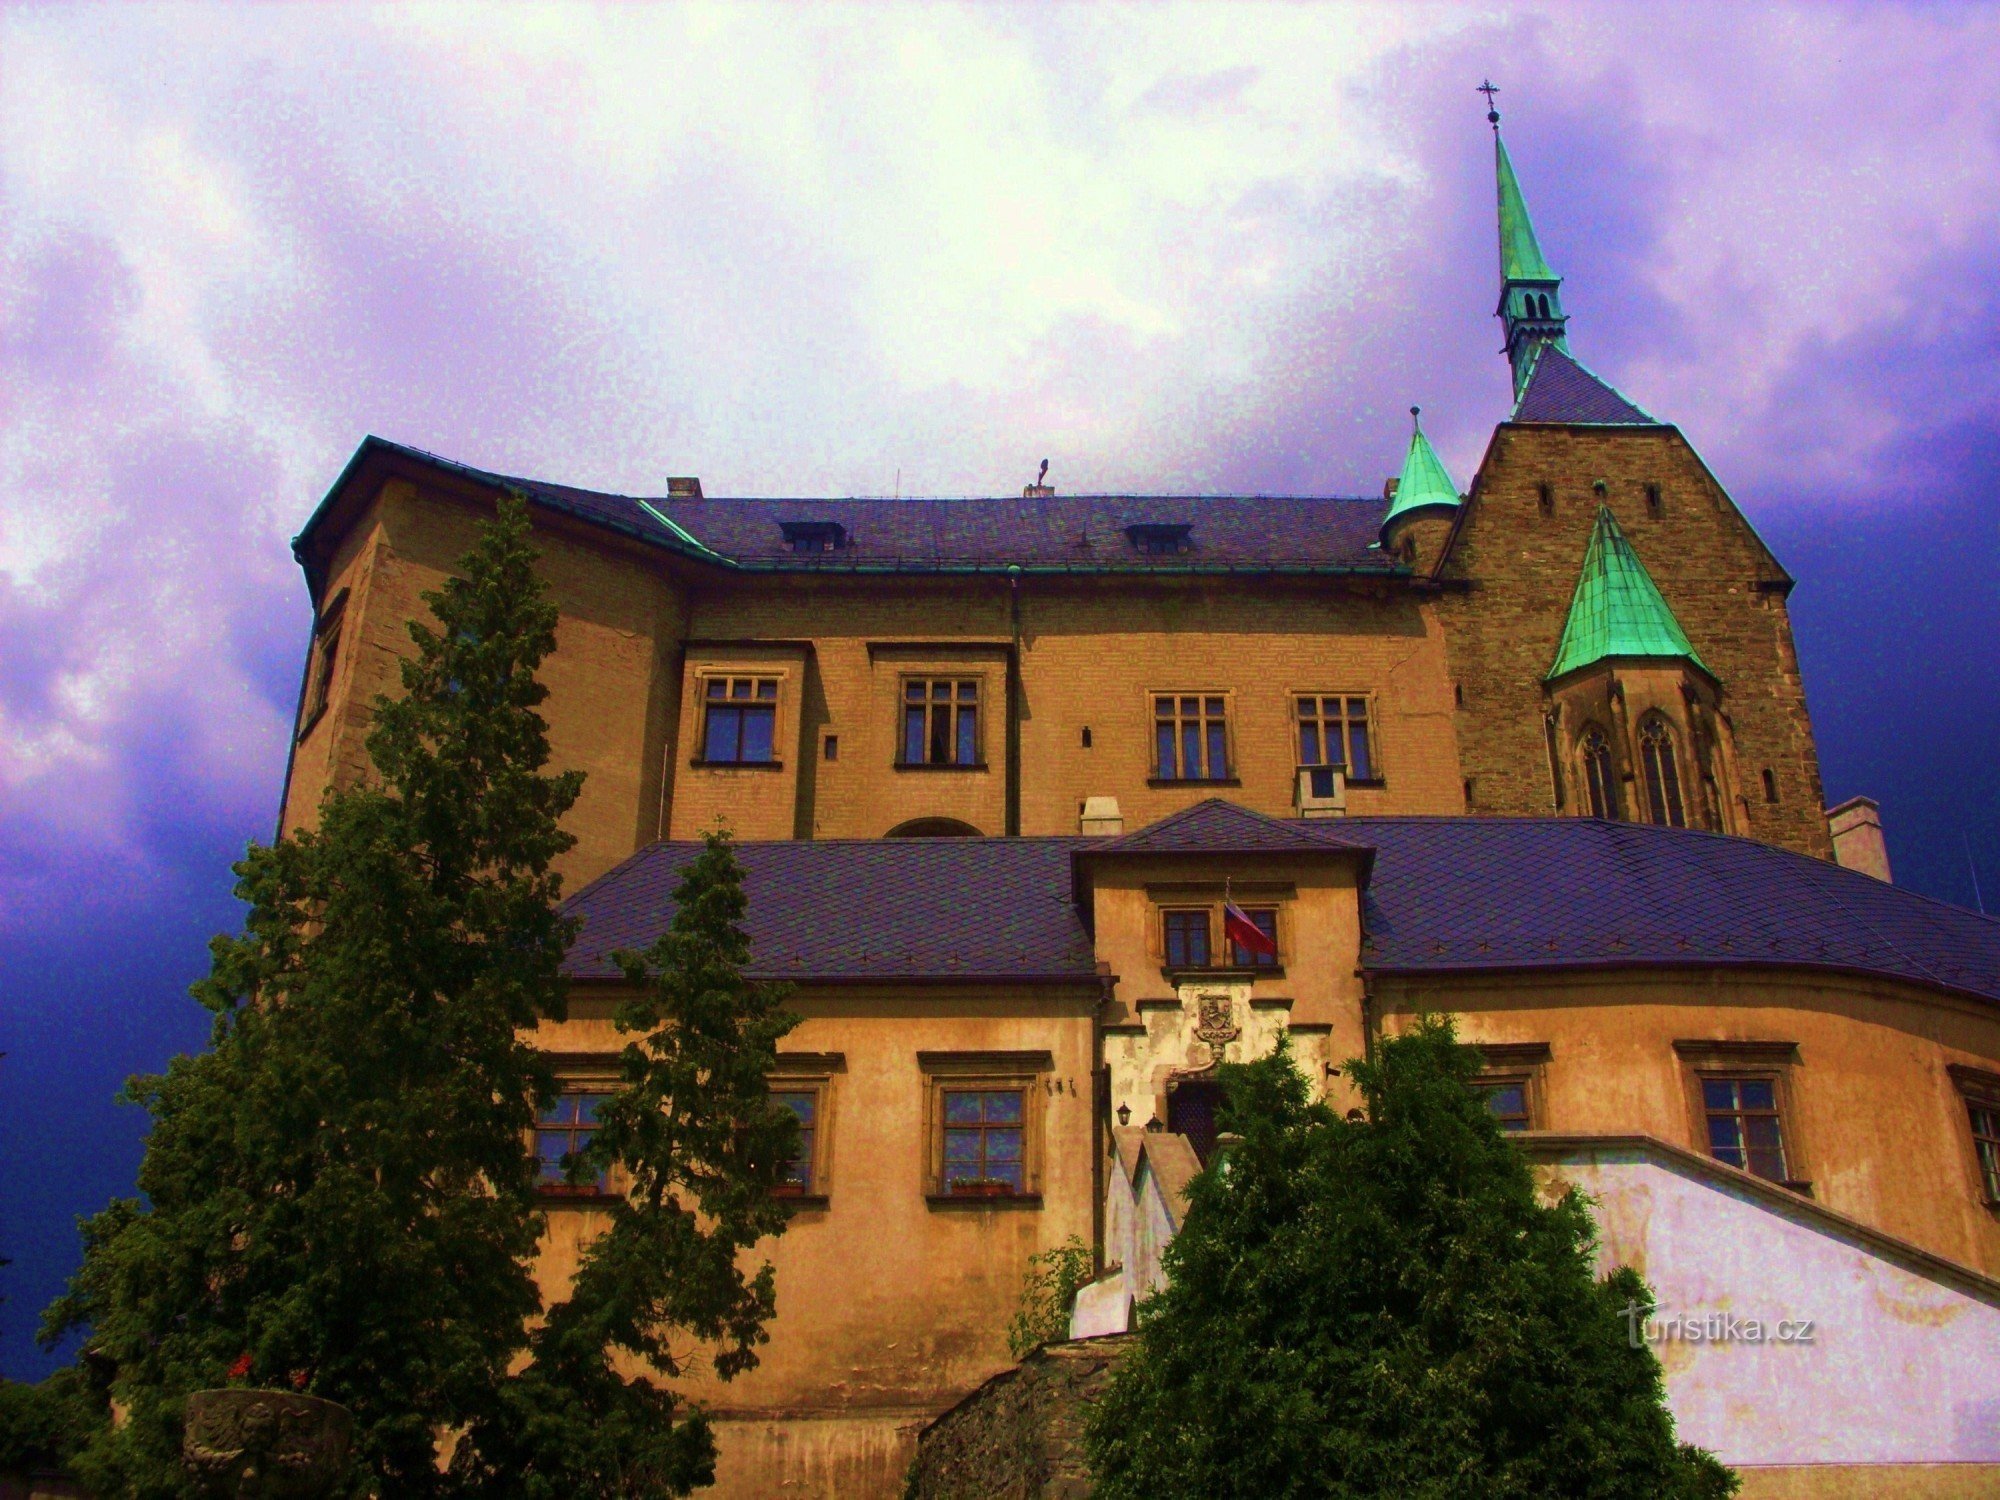 Svatý Kopeček 动物园 - Šternberk 城堡 - 奥洛穆茨 (2004)